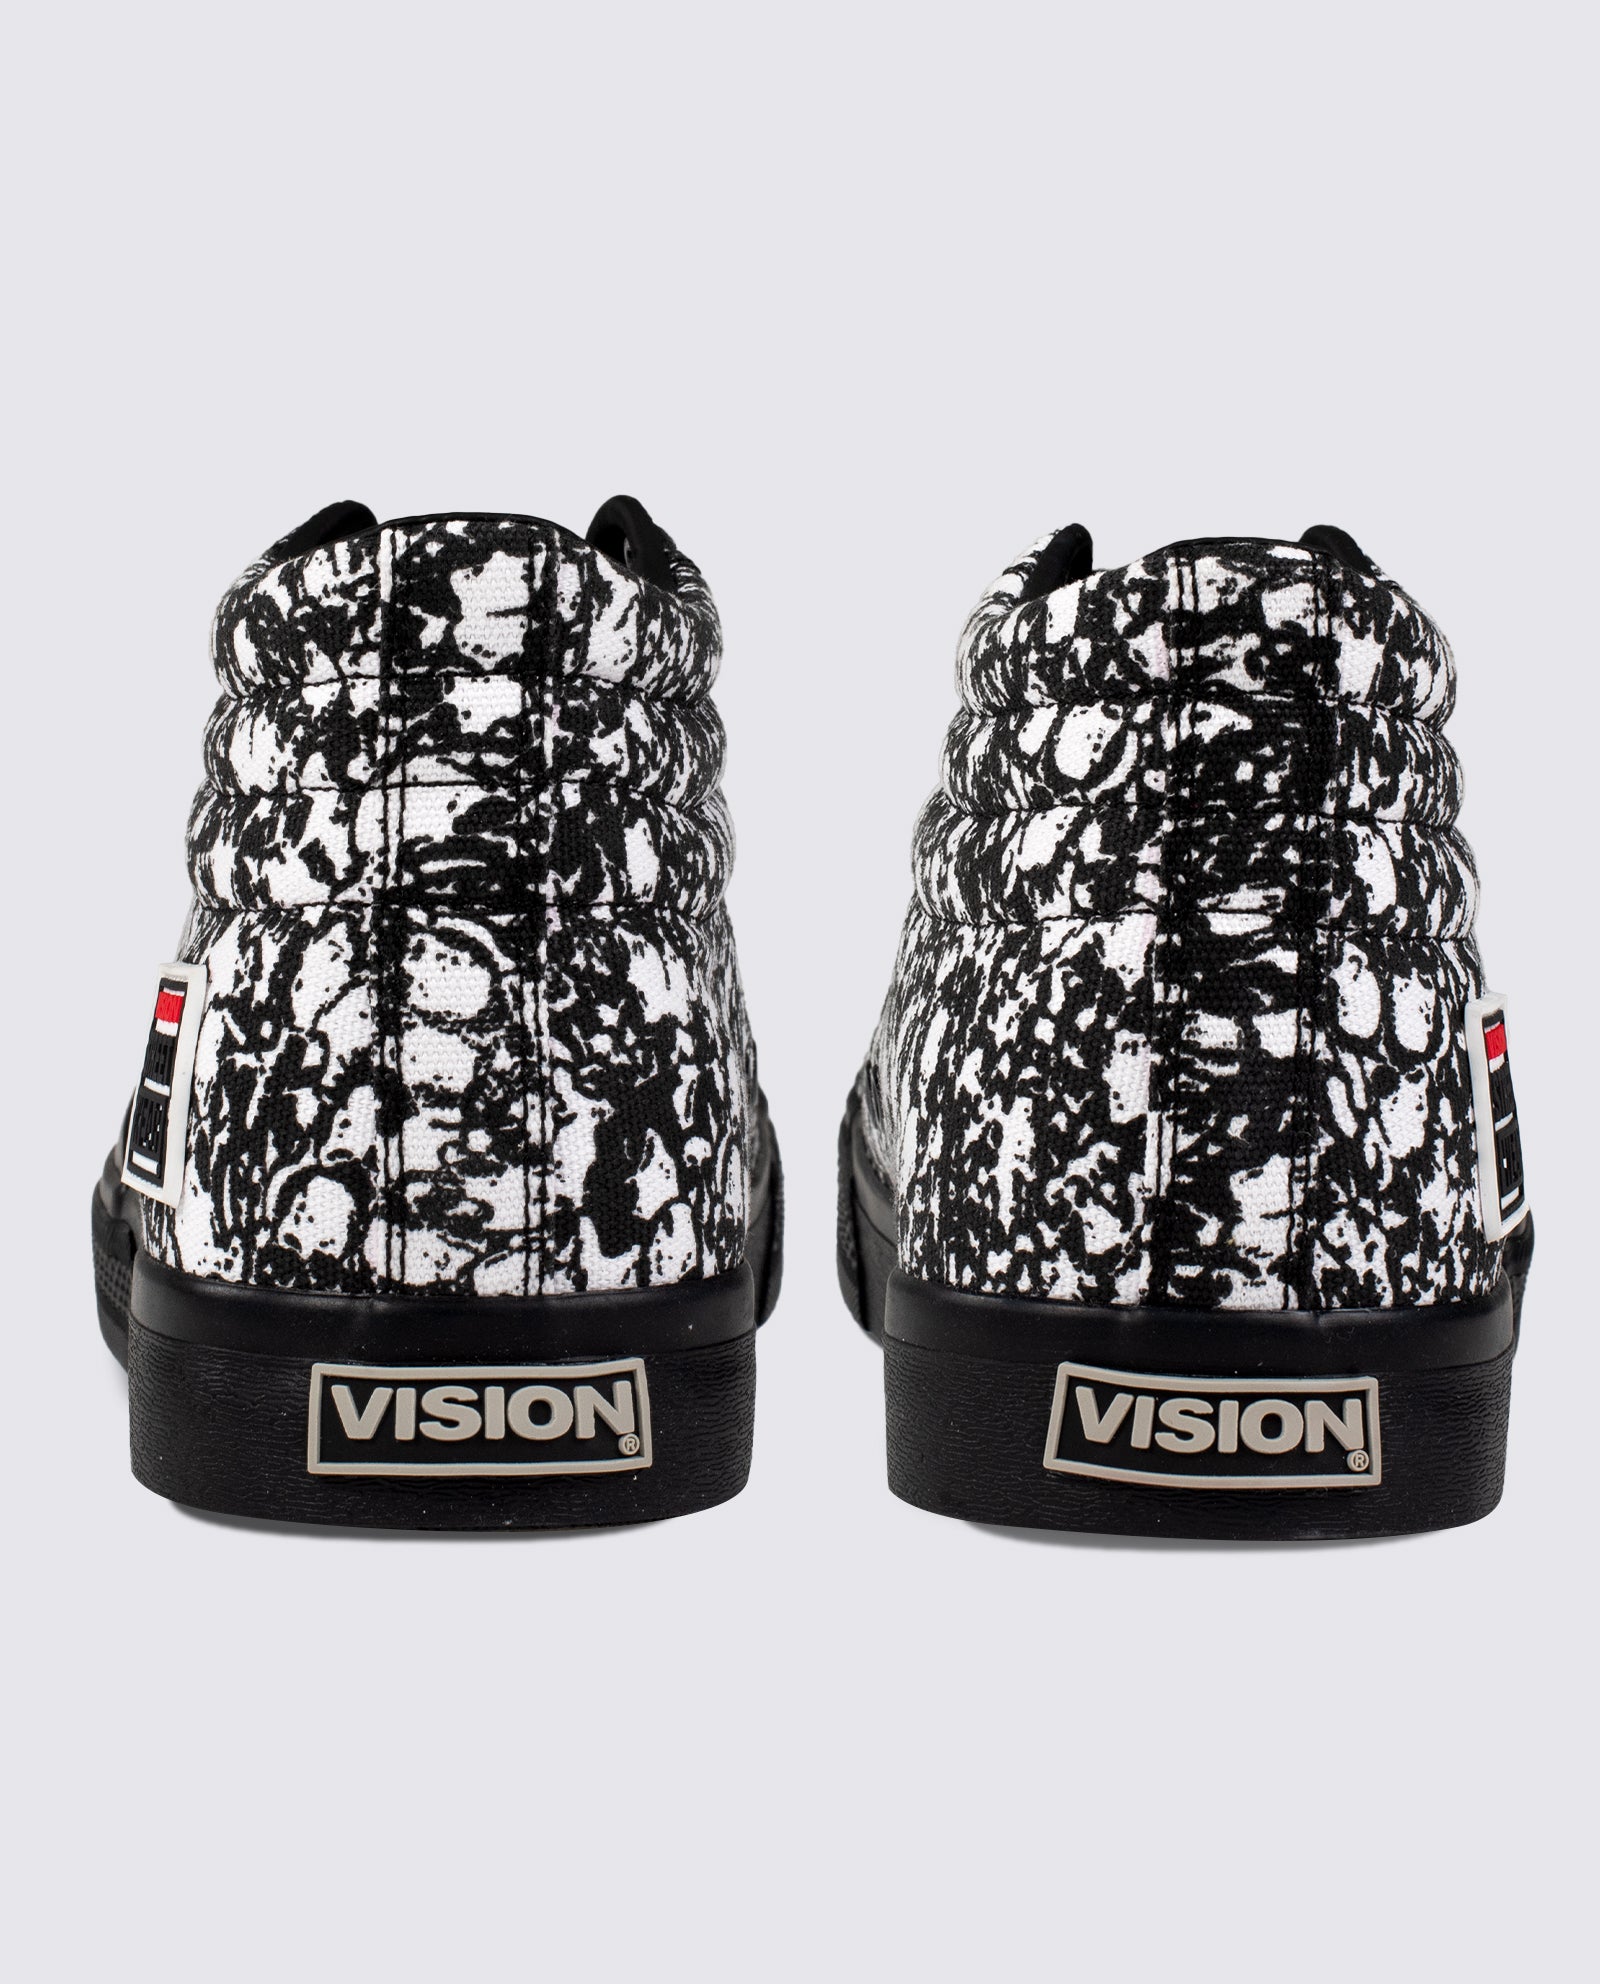 Vision Street Wear Canvas High Top Skateboard Sneakers Skull